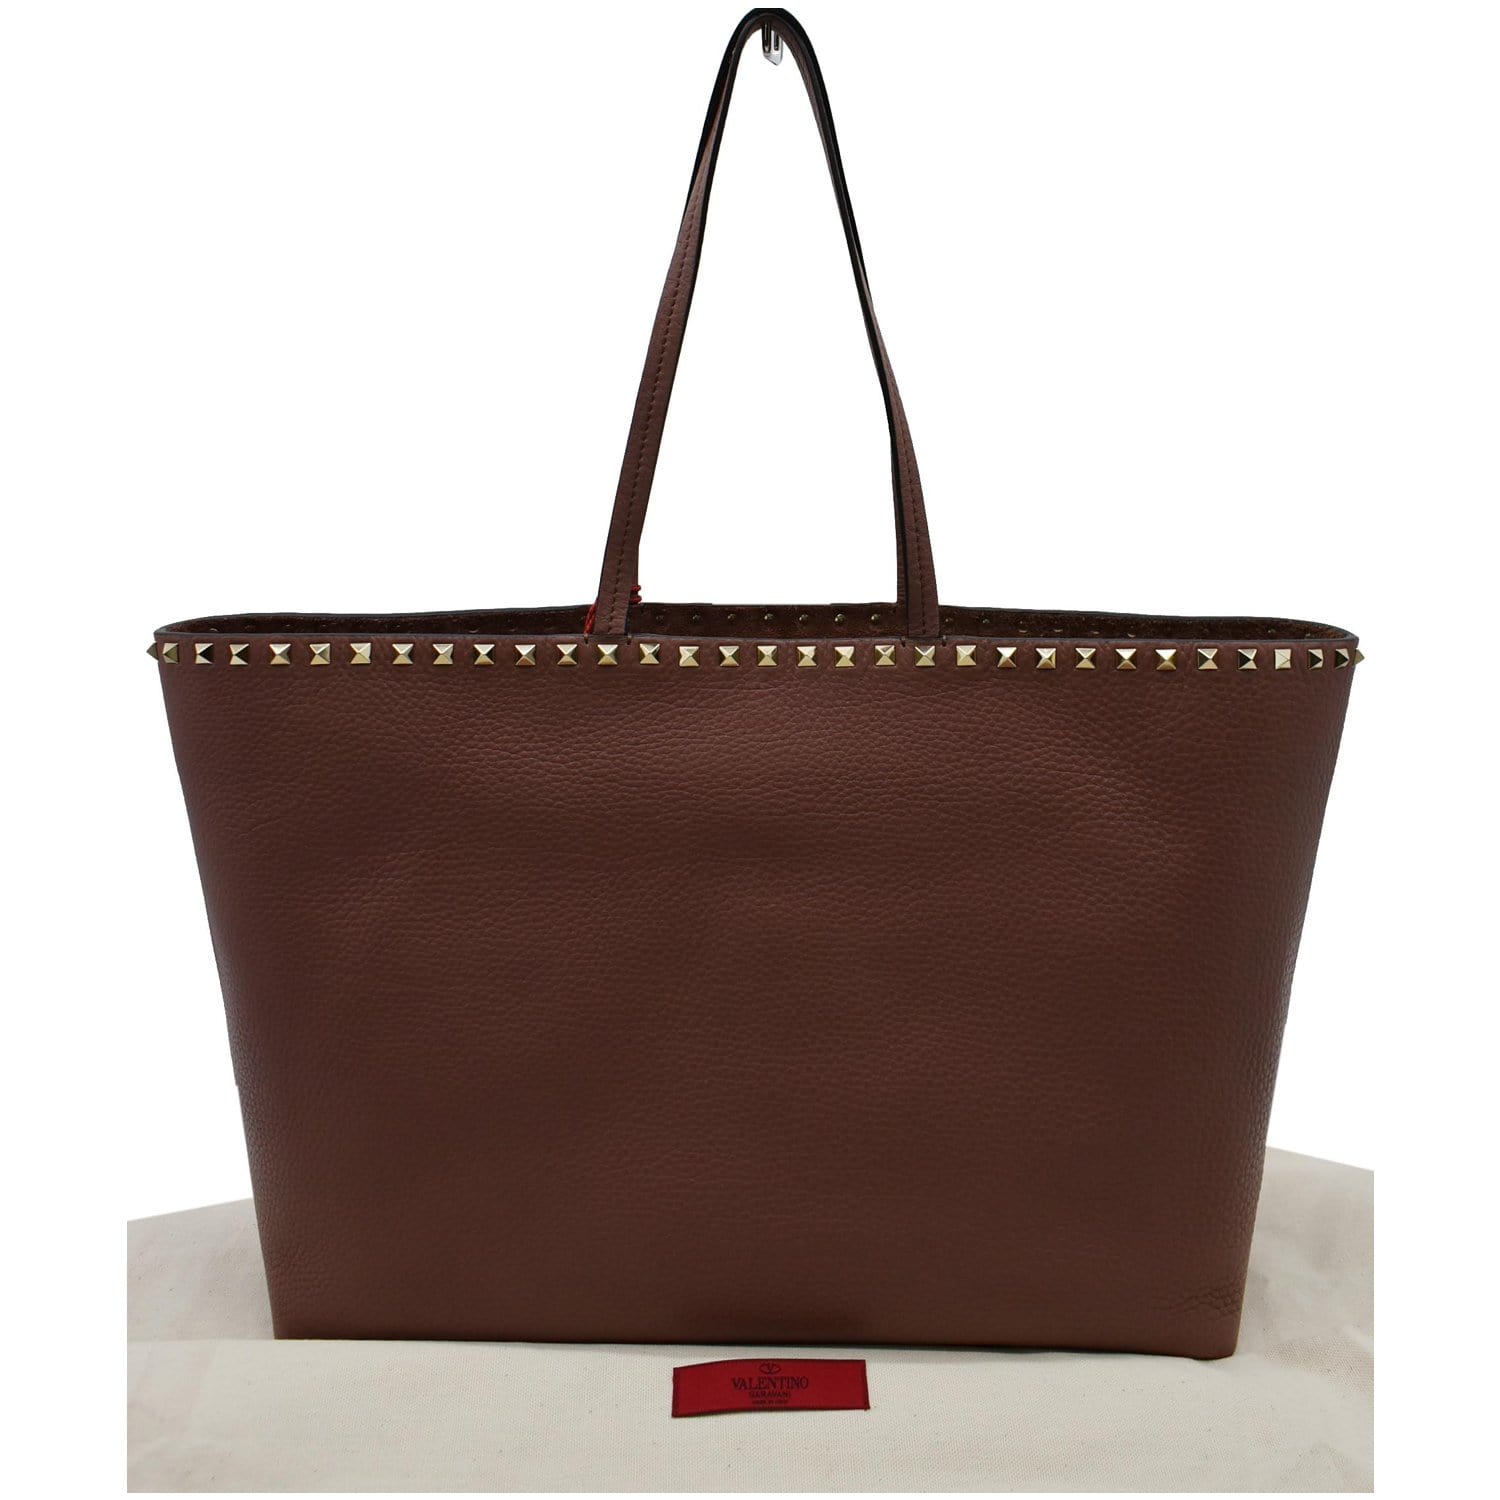 Valentino Garavani Rockstud Leather Shopping Bag